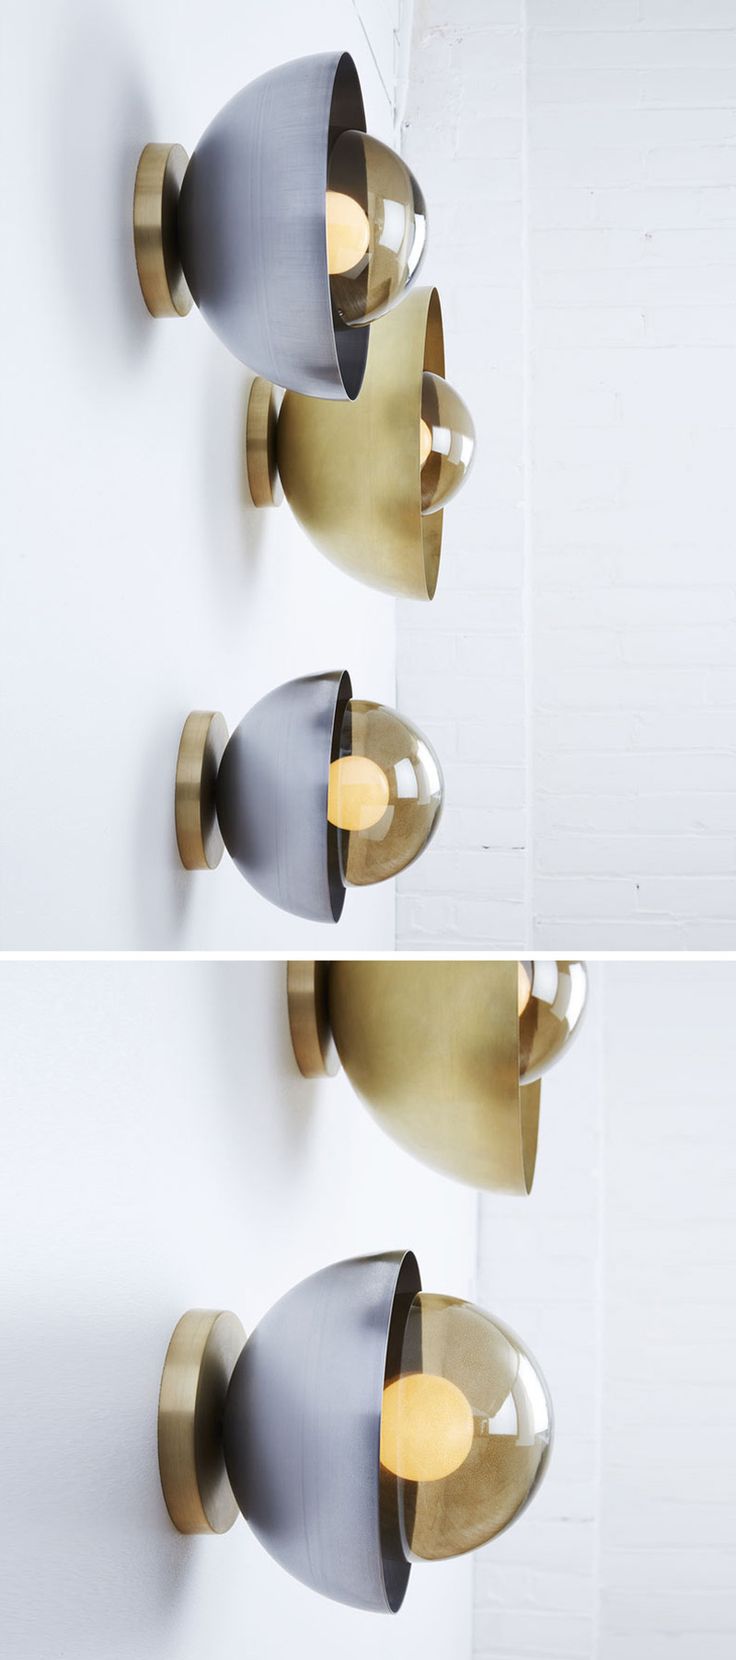 The metallic materials allow these modern wall light fixtures to reflect light, ...